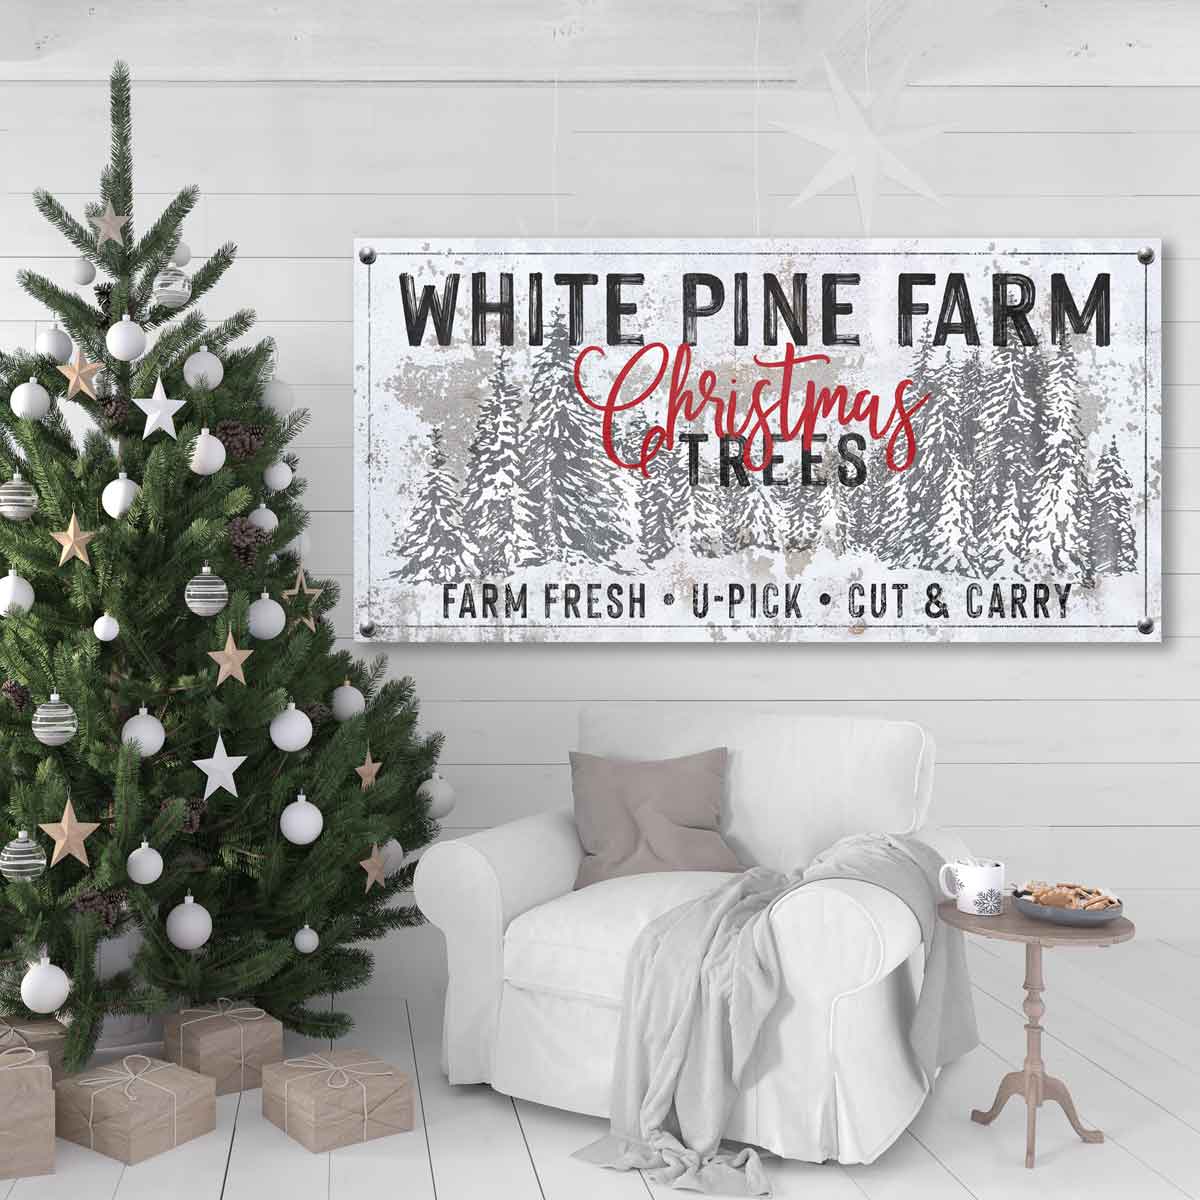 Snowy gray Christmas trees against a snowy background. Words say: White Pine Farm Christmas Trees, Farm Fresh, U-Pick, Cut and Carry